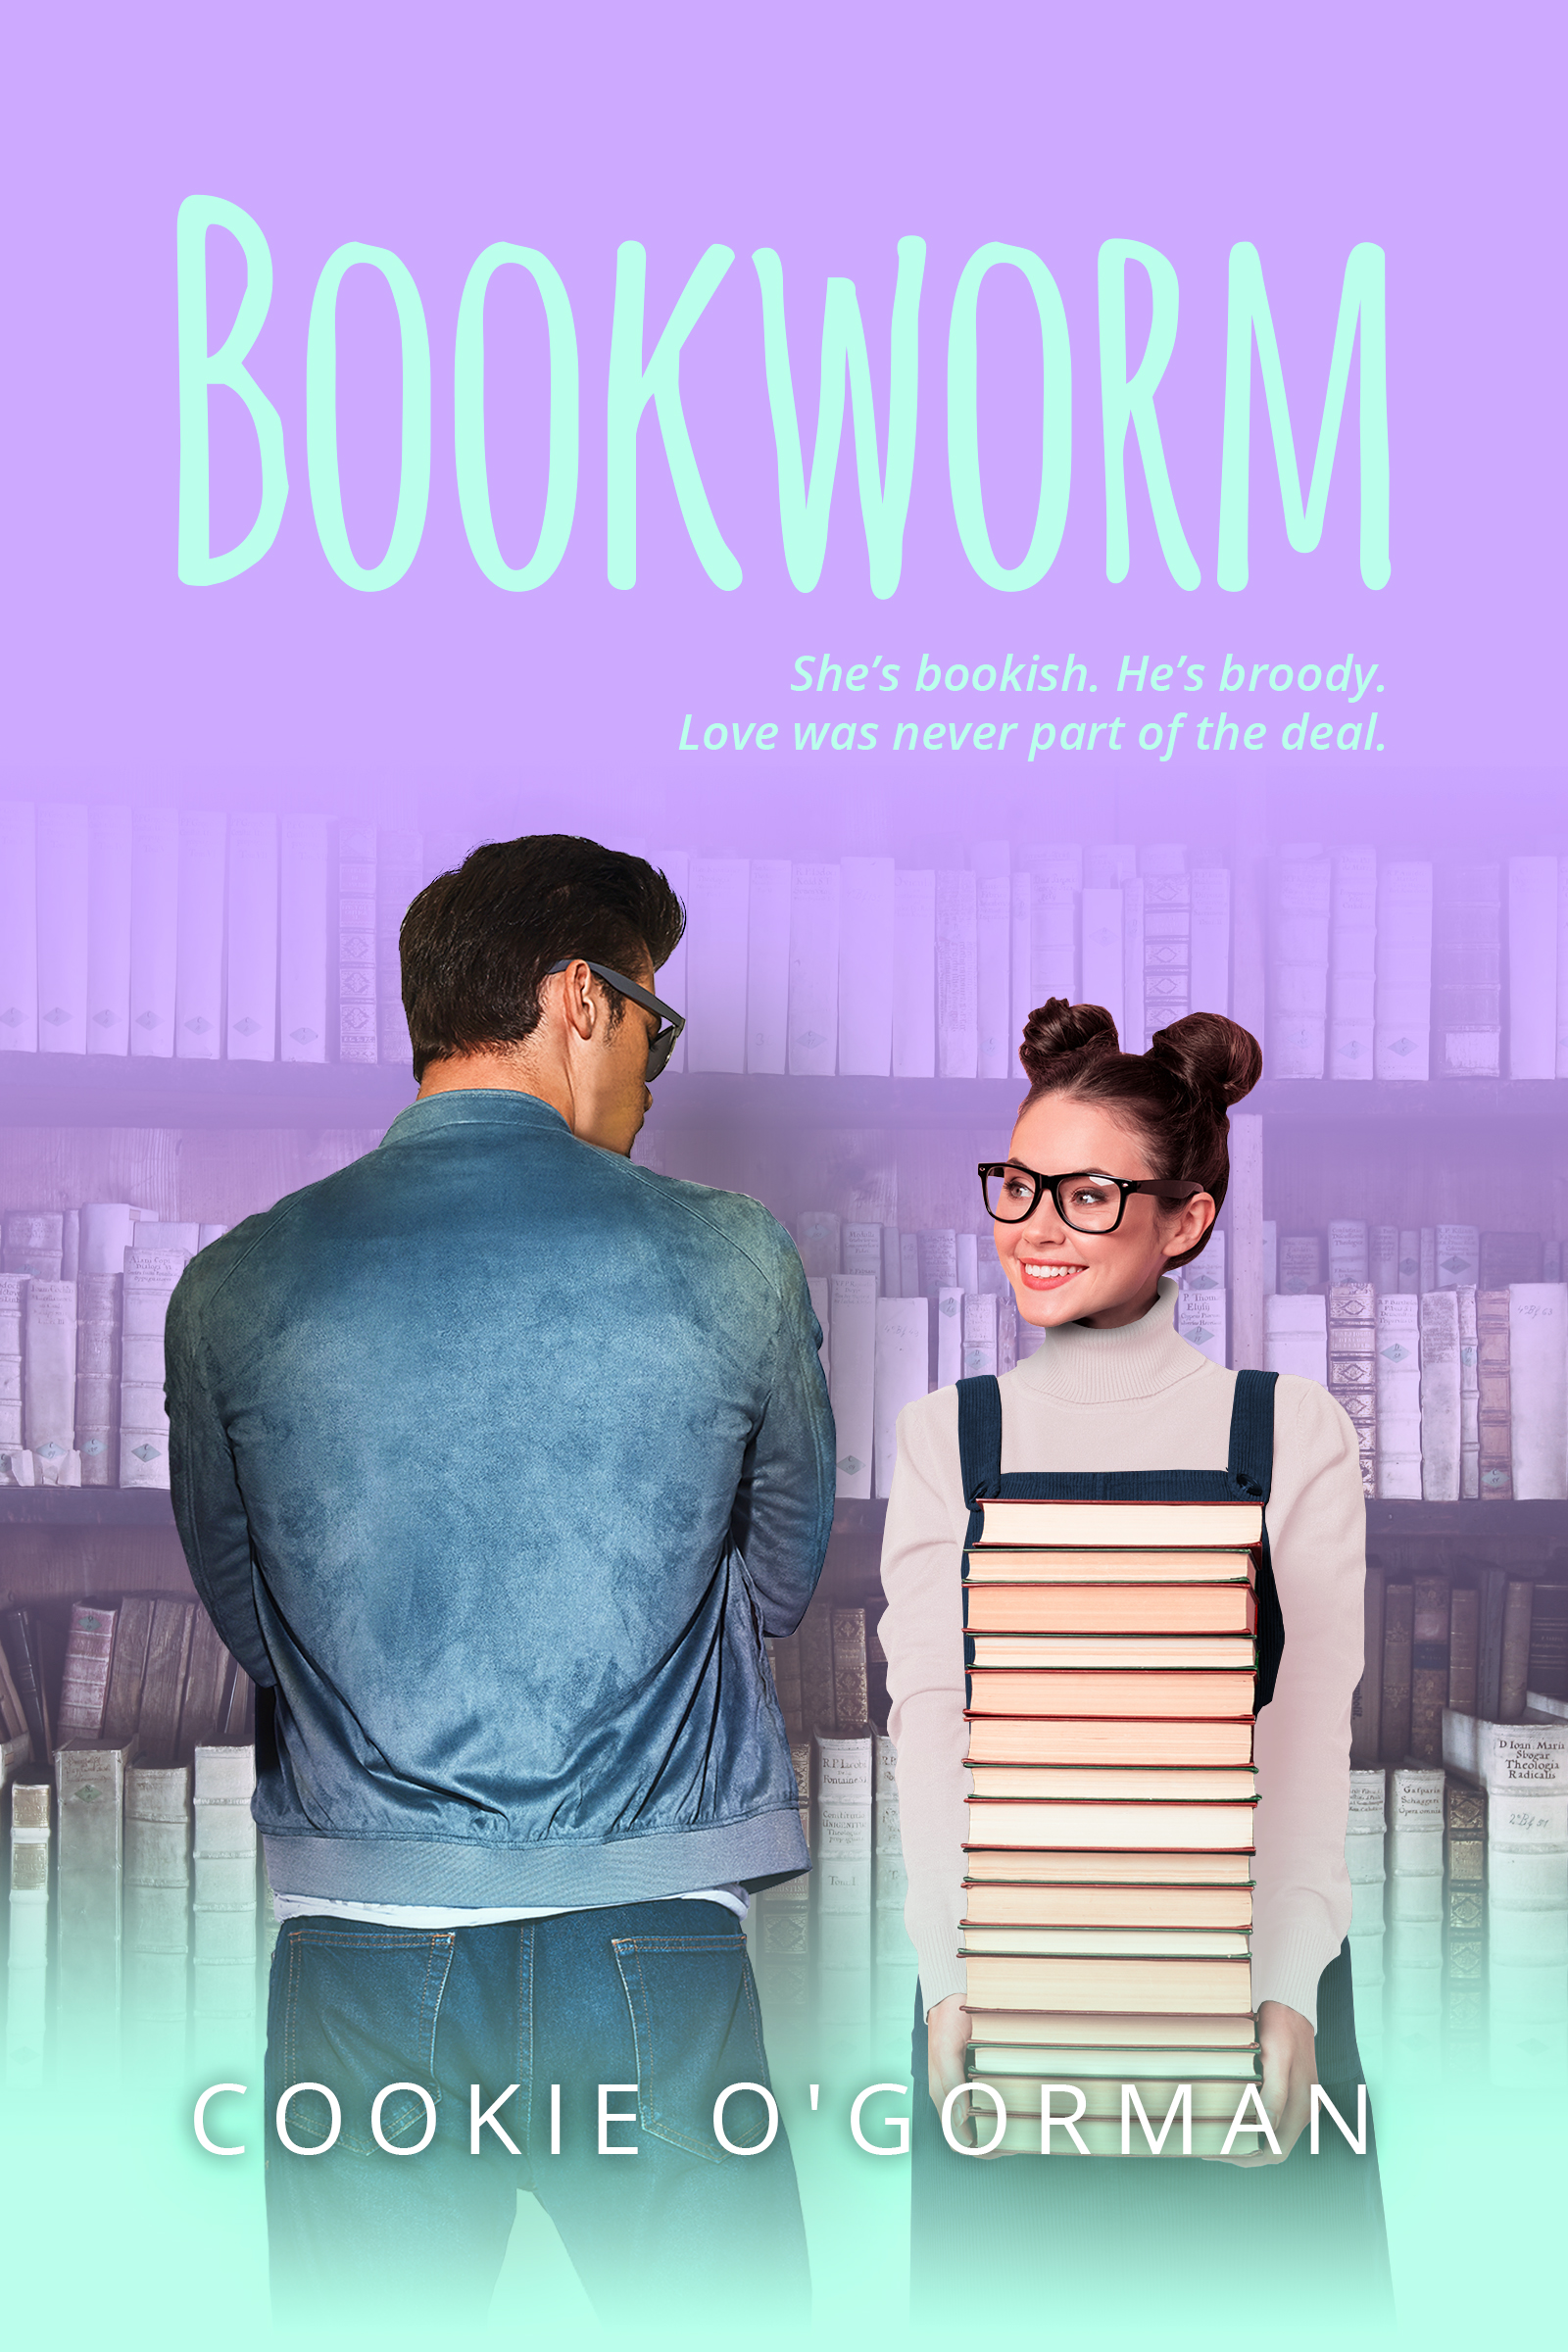 Bookworm by Cookie O'Gorman